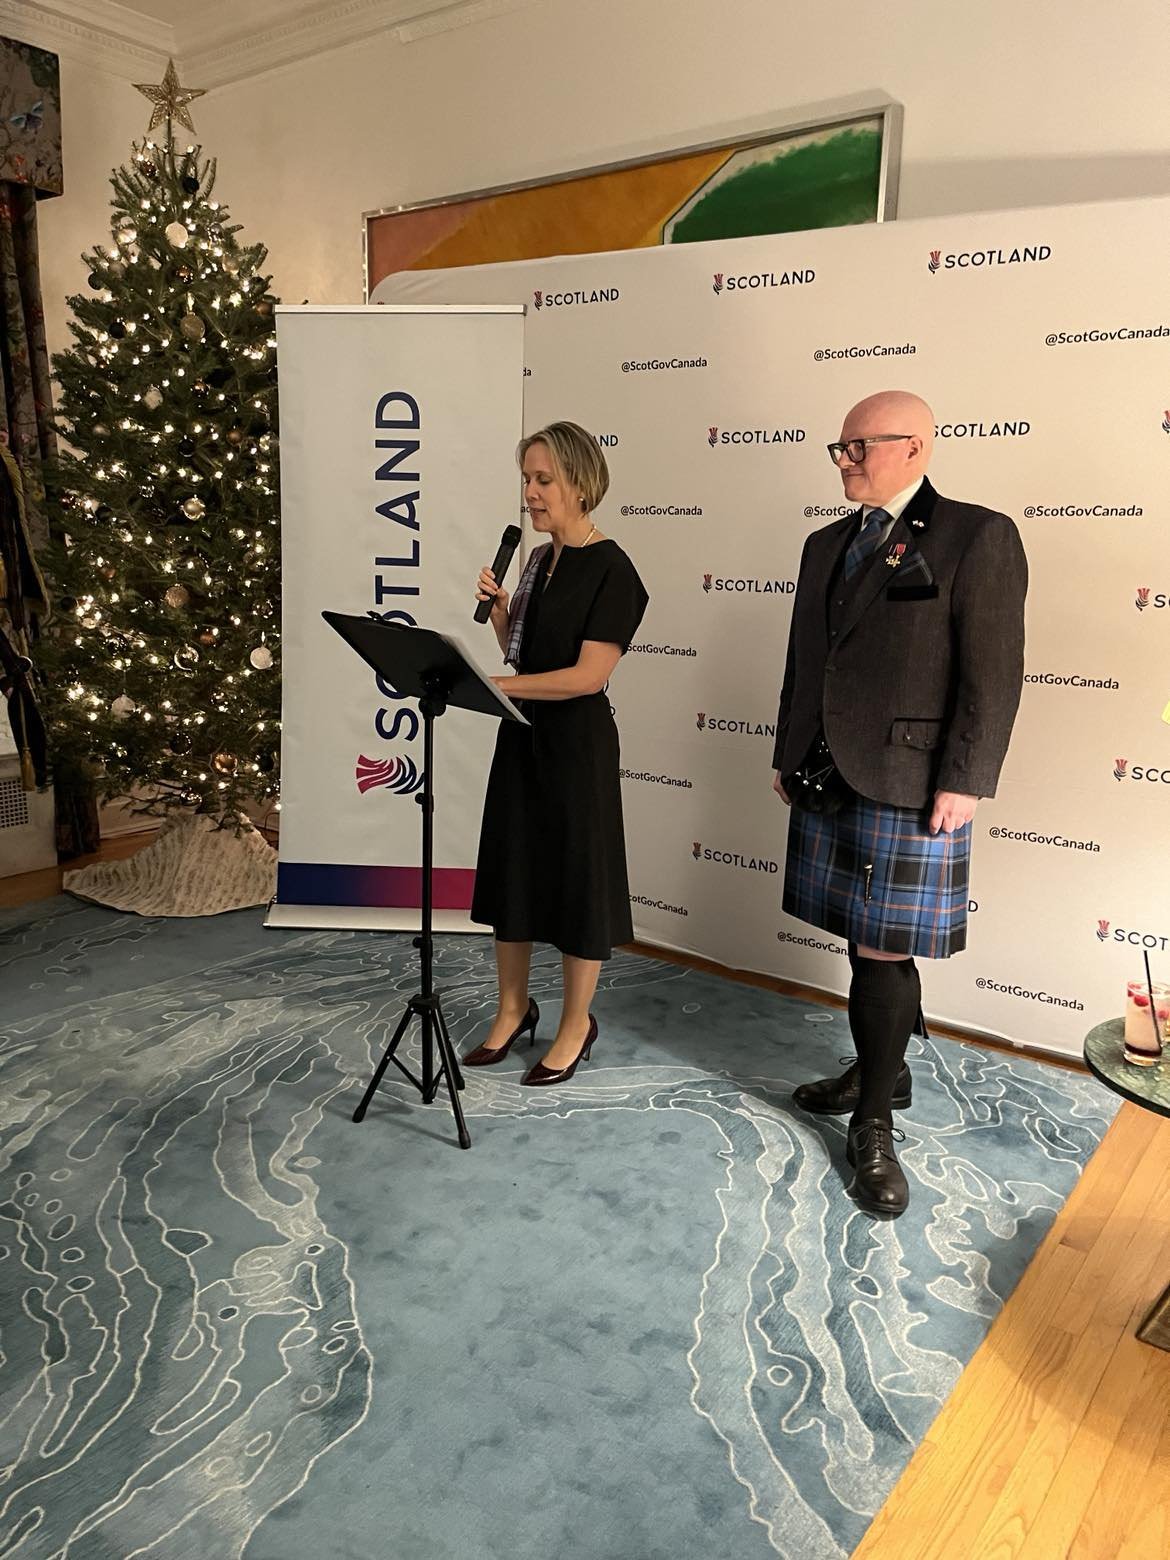 British High Commissioner Susannah Goshko and Head of the Scottish Government in Canada John Devine